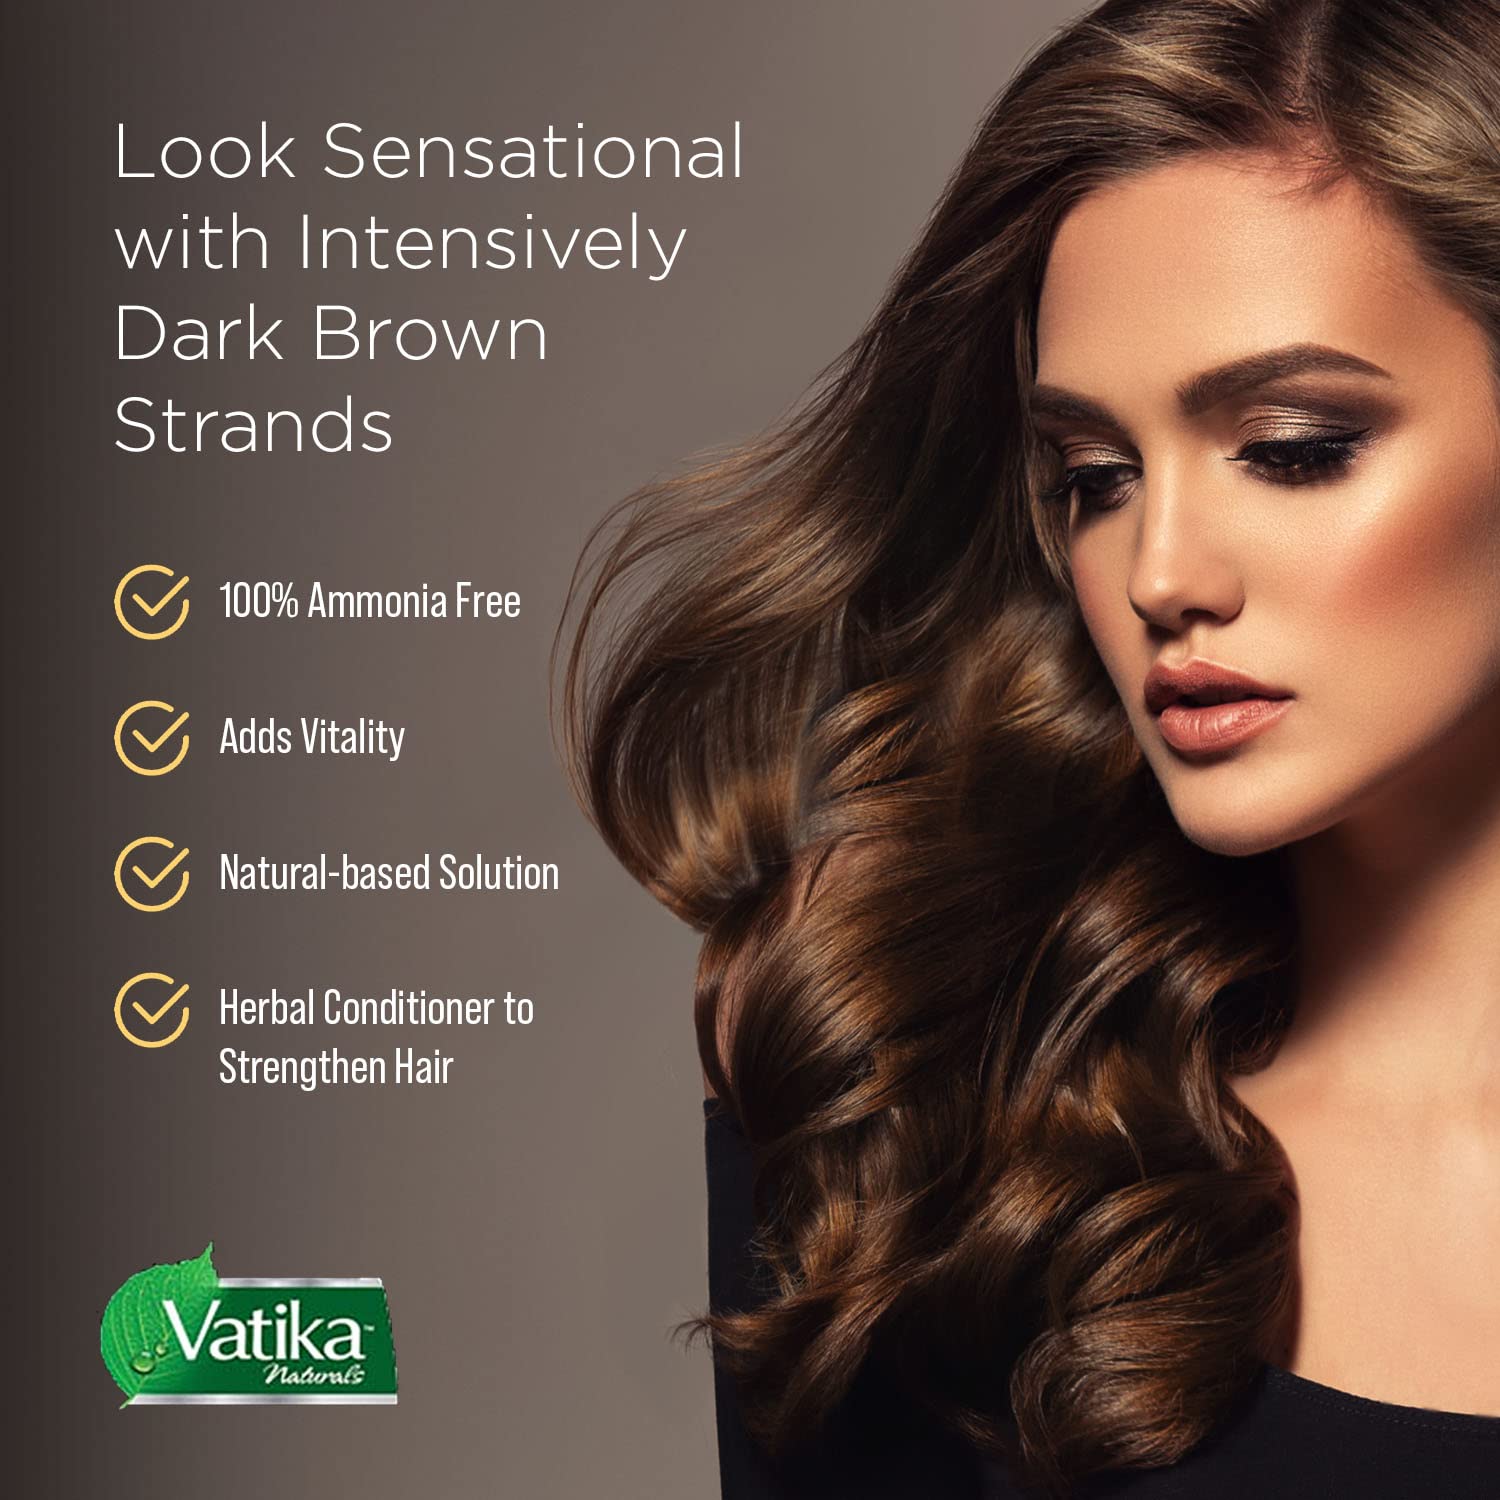 Dabur Vatika Henna Hair Color - Henna Hair Dye, Henna Hair Color and Conditioner, Zero Ammonia Henna for Strong and Shiny Hair, 100% Grey Coverage, 6 Sachets X 10g (Dark Brown)